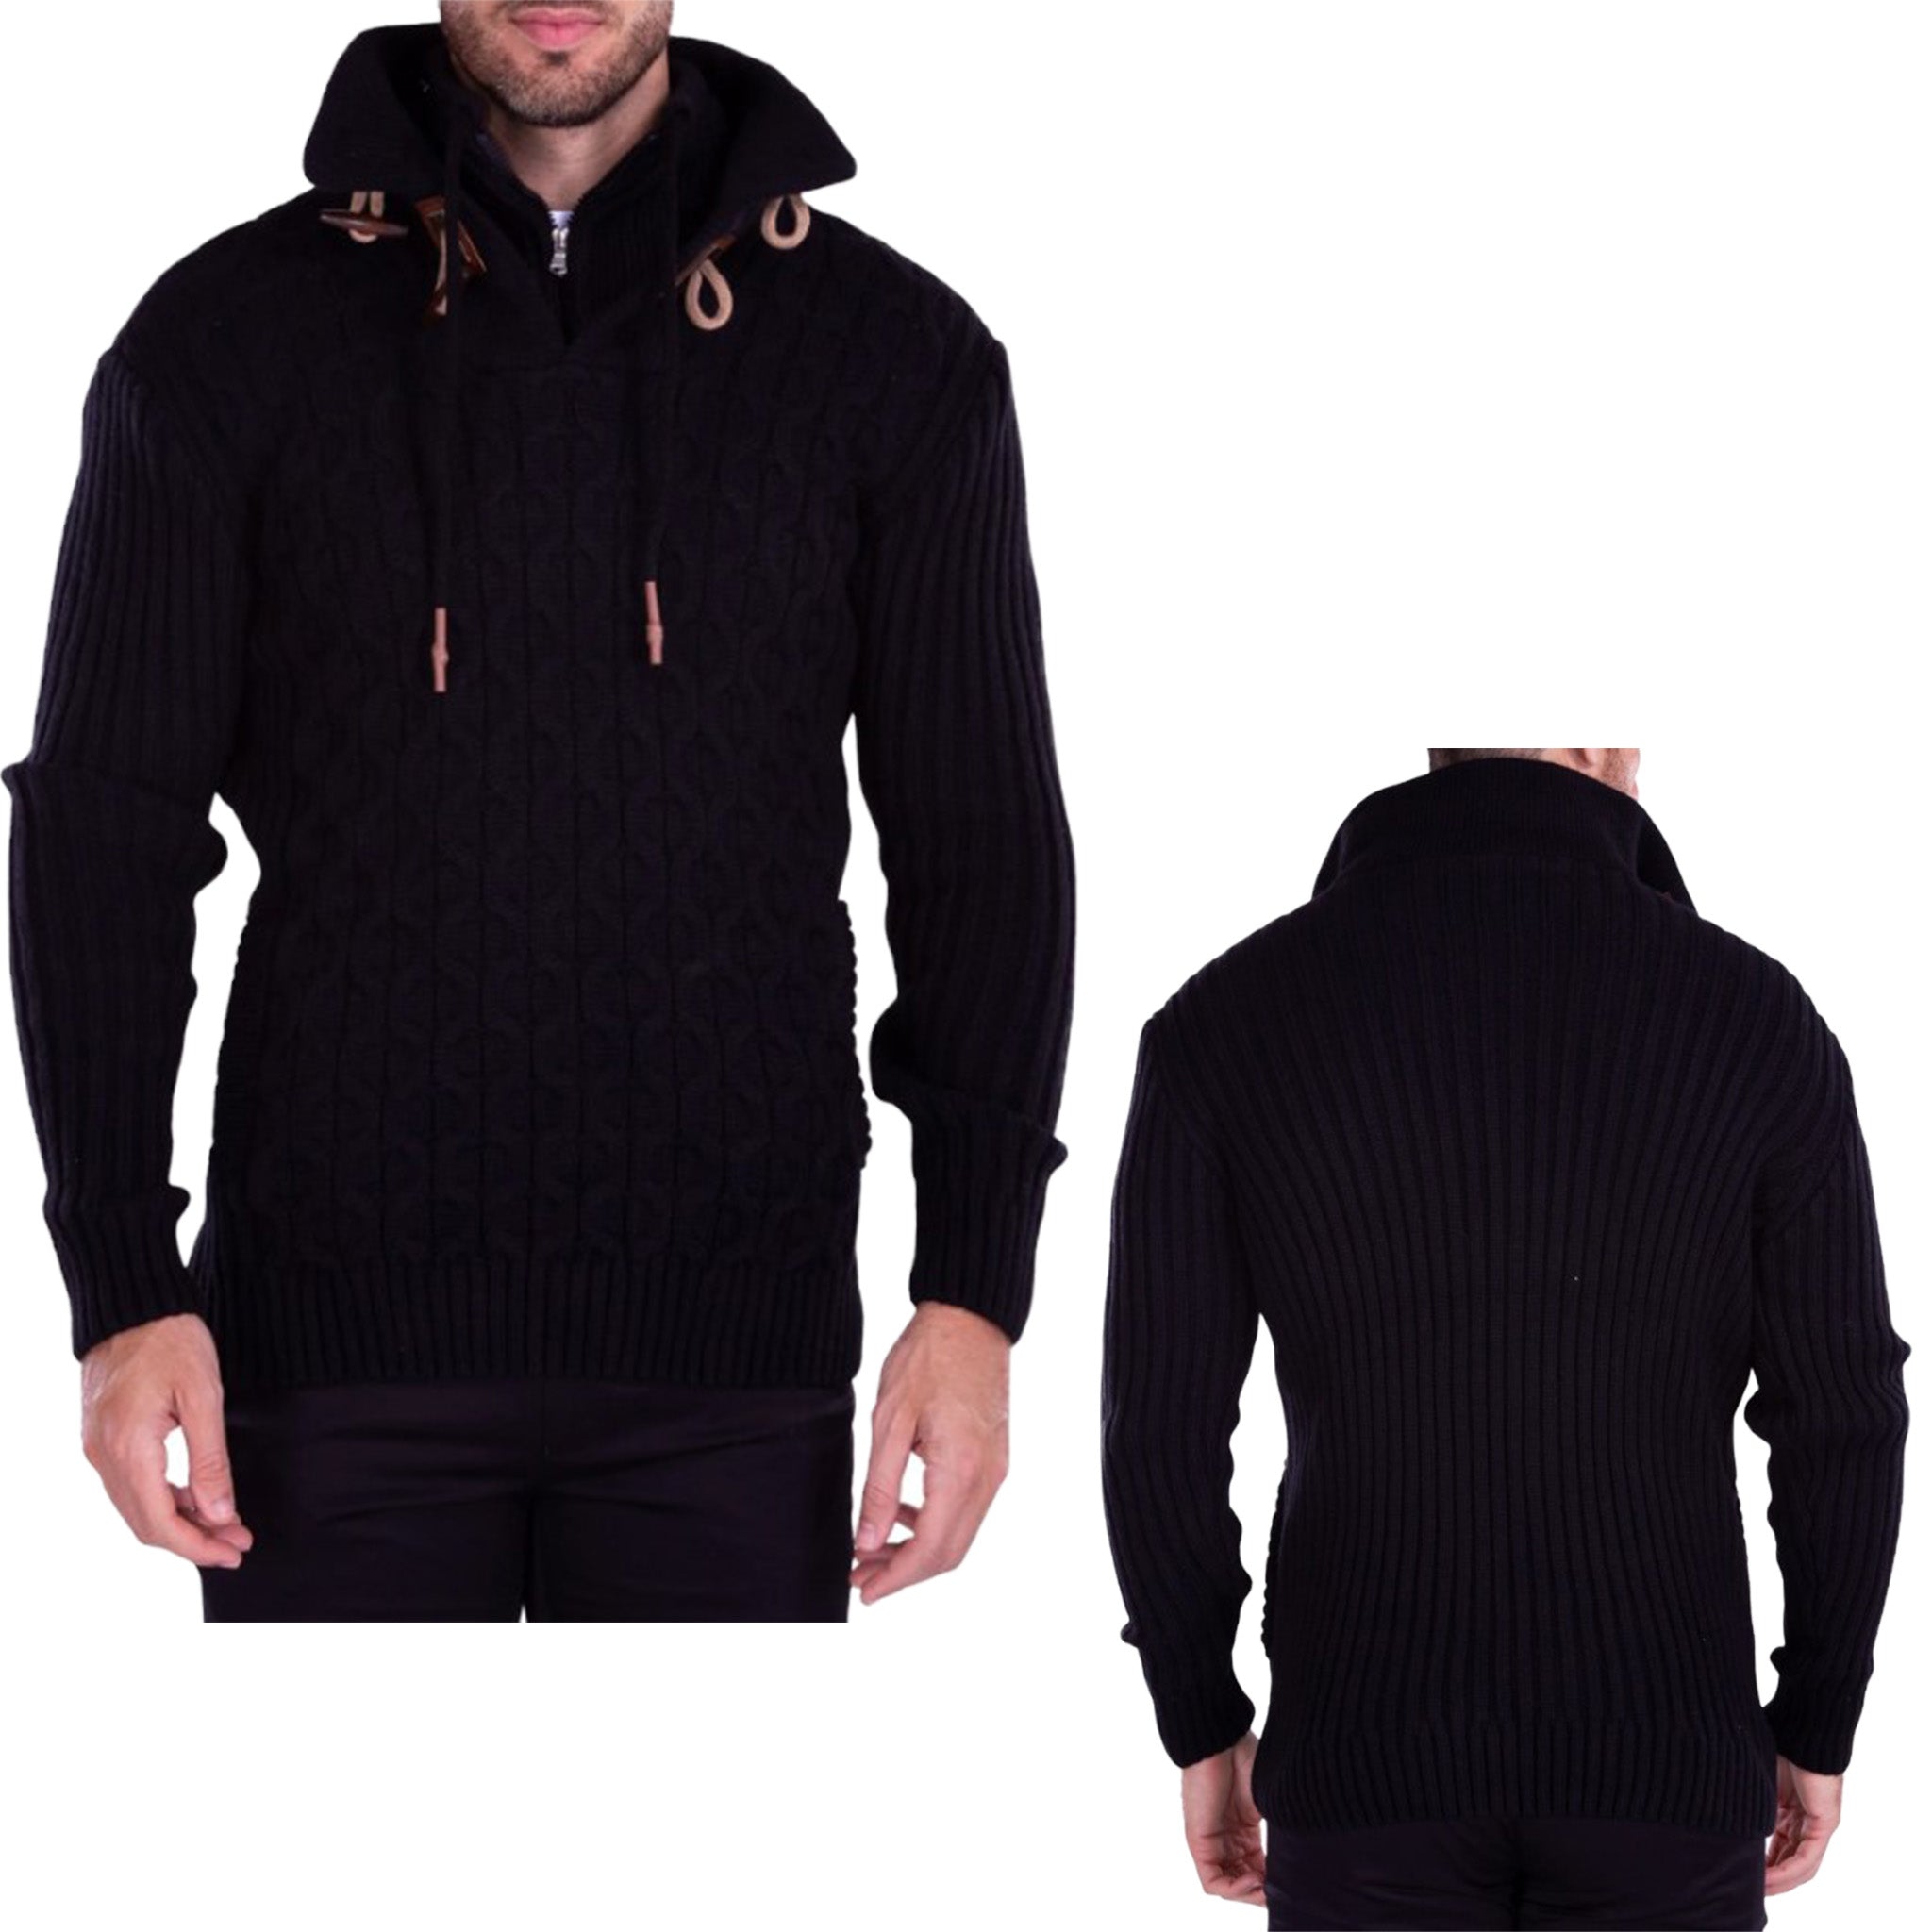 Black Cowl Neck Men's Sweater